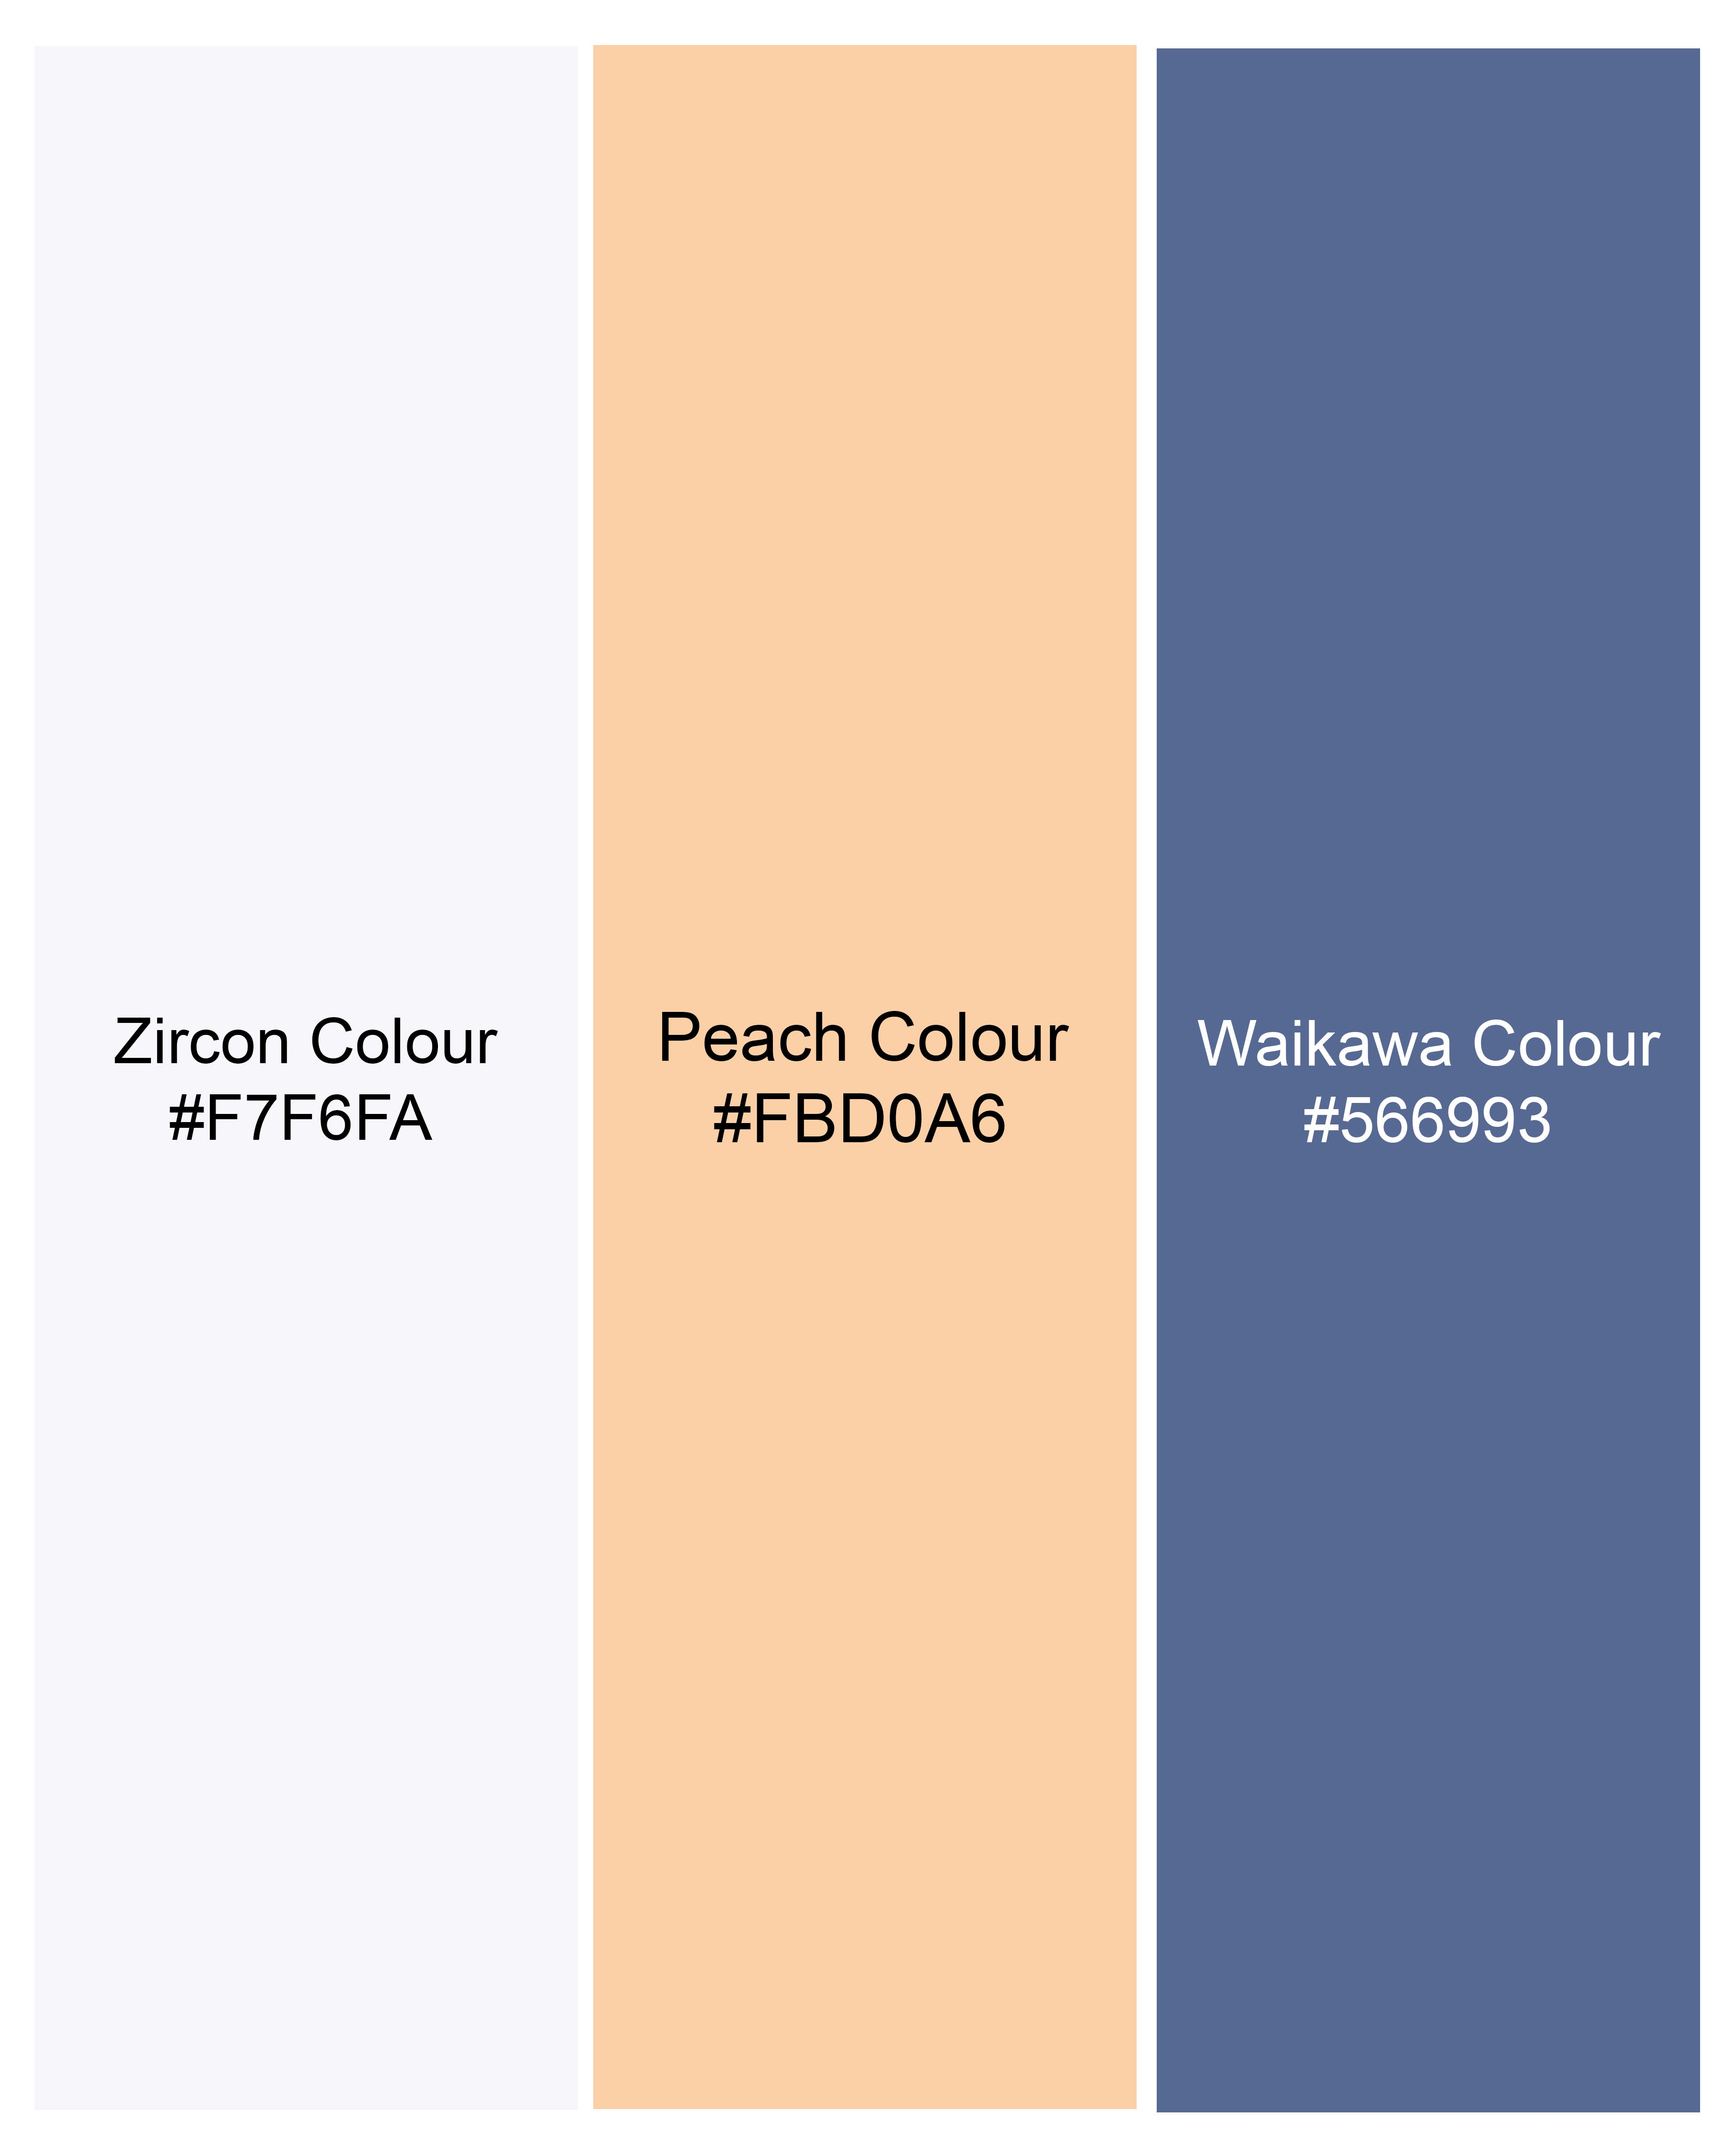 Zircon Cream and Peach Striped Luxurious Linen Shirt 9973-BLE-38, 9973-BLE-H-38, 9973-BLE-39, 9973-BLE-H-39, 9973-BLE-40, 9973-BLE-H-40, 9973-BLE-42, 9973-BLE-H-42, 9973-BLE-44, 9973-BLE-H-44, 9973-BLE-46, 9973-BLE-H-46, 9973-BLE-48, 9973-BLE-H-48, 9973-BLE-50, 9973-BLE-H-50, 9973-BLE-52, 9973-BLE-H-52